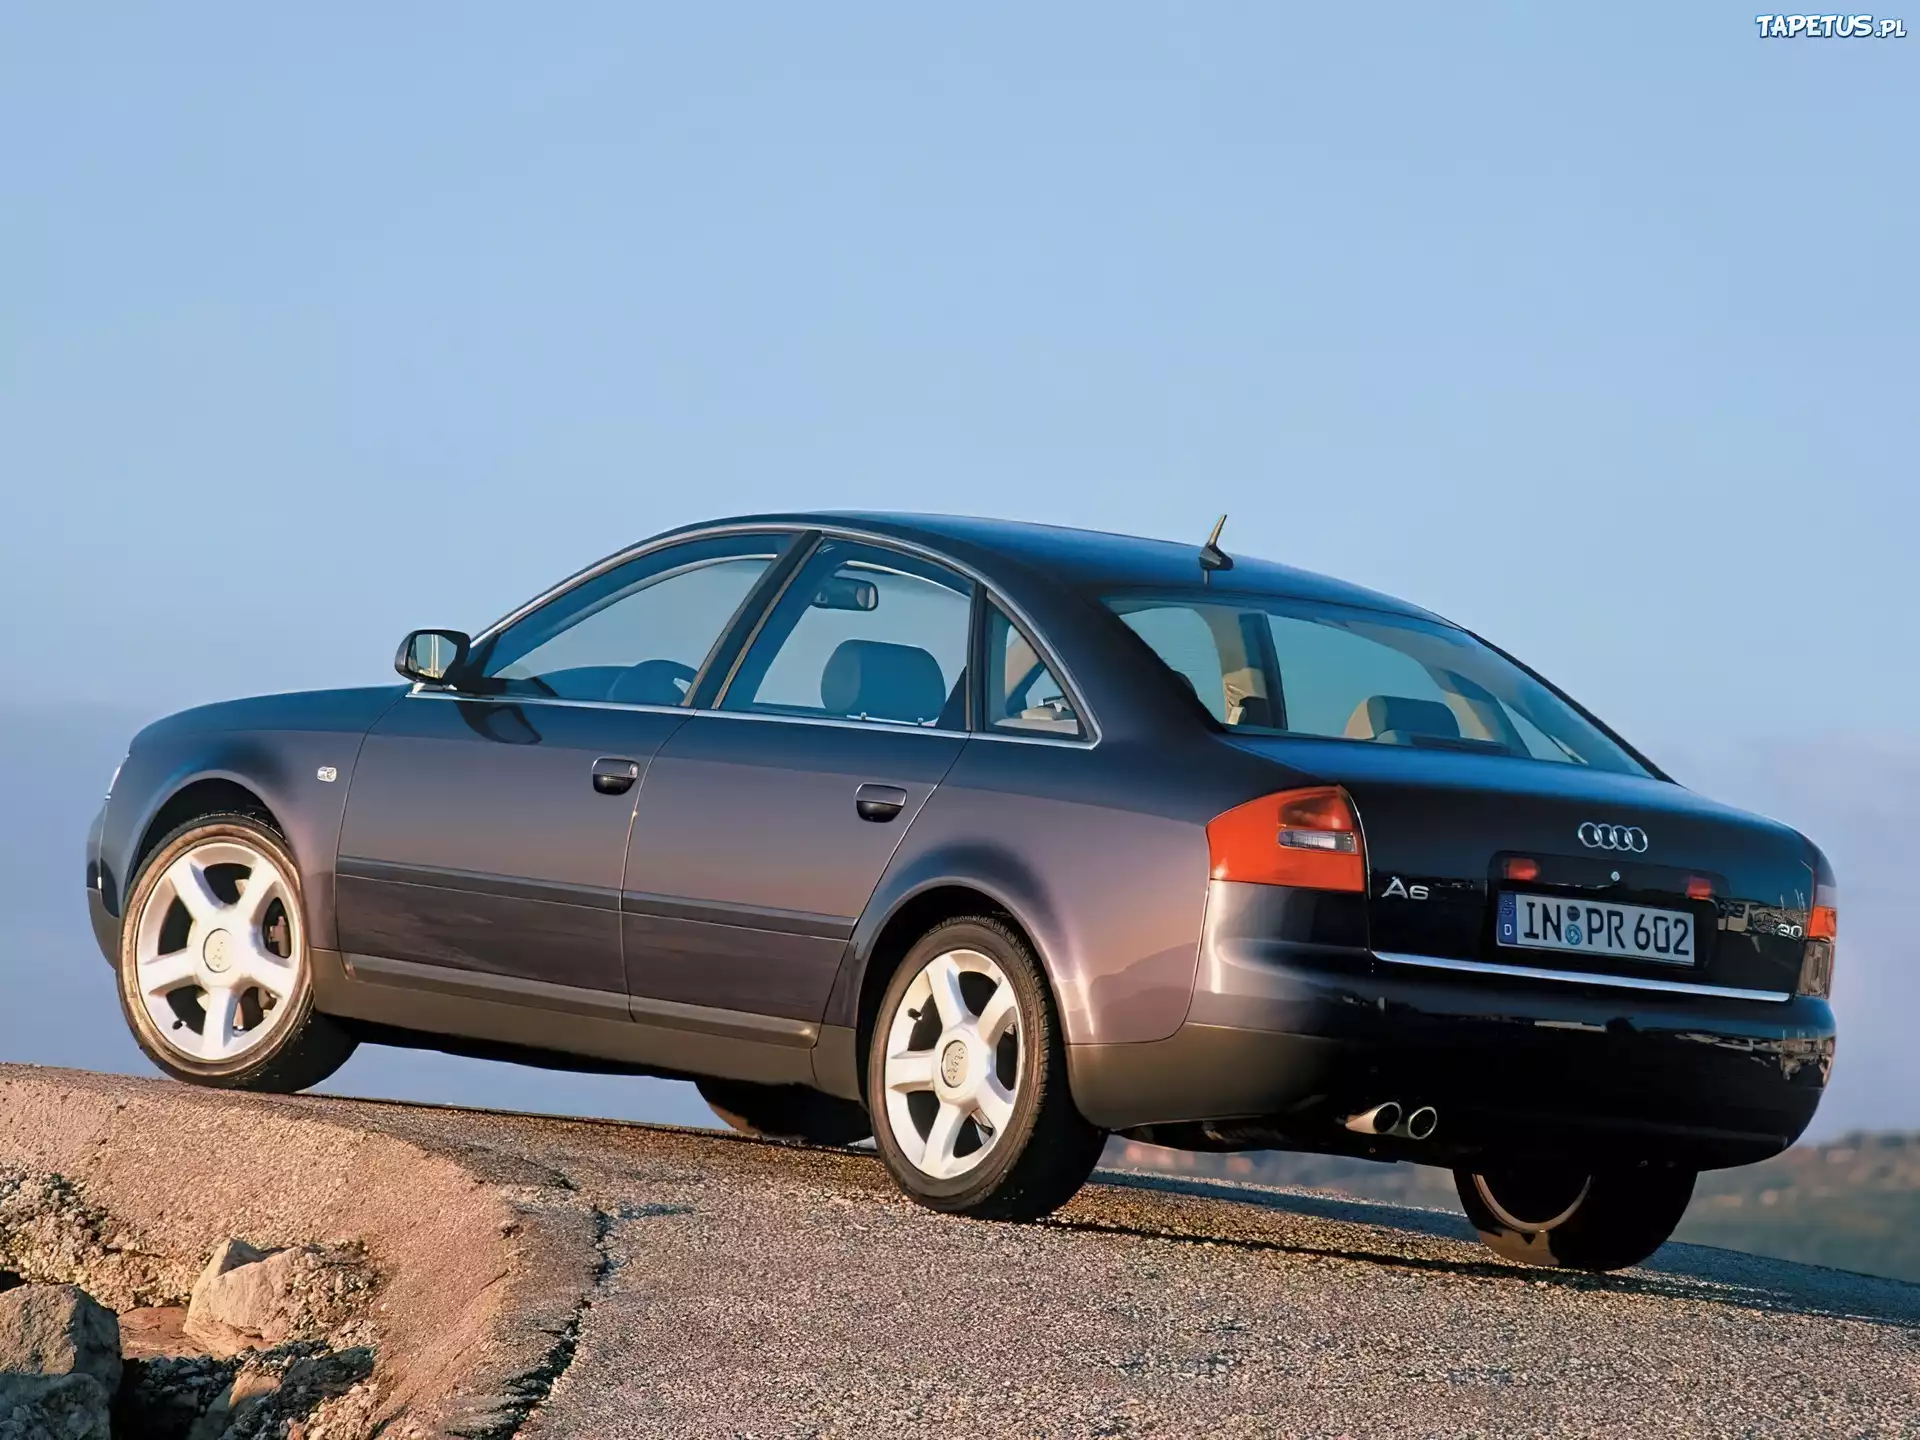 Ауди а6 с5 купить бу. Ауди а6 седан 2001. Audi a6 c5 2002. Audi a6 c5 2001. Ауди а6 с5 1997.